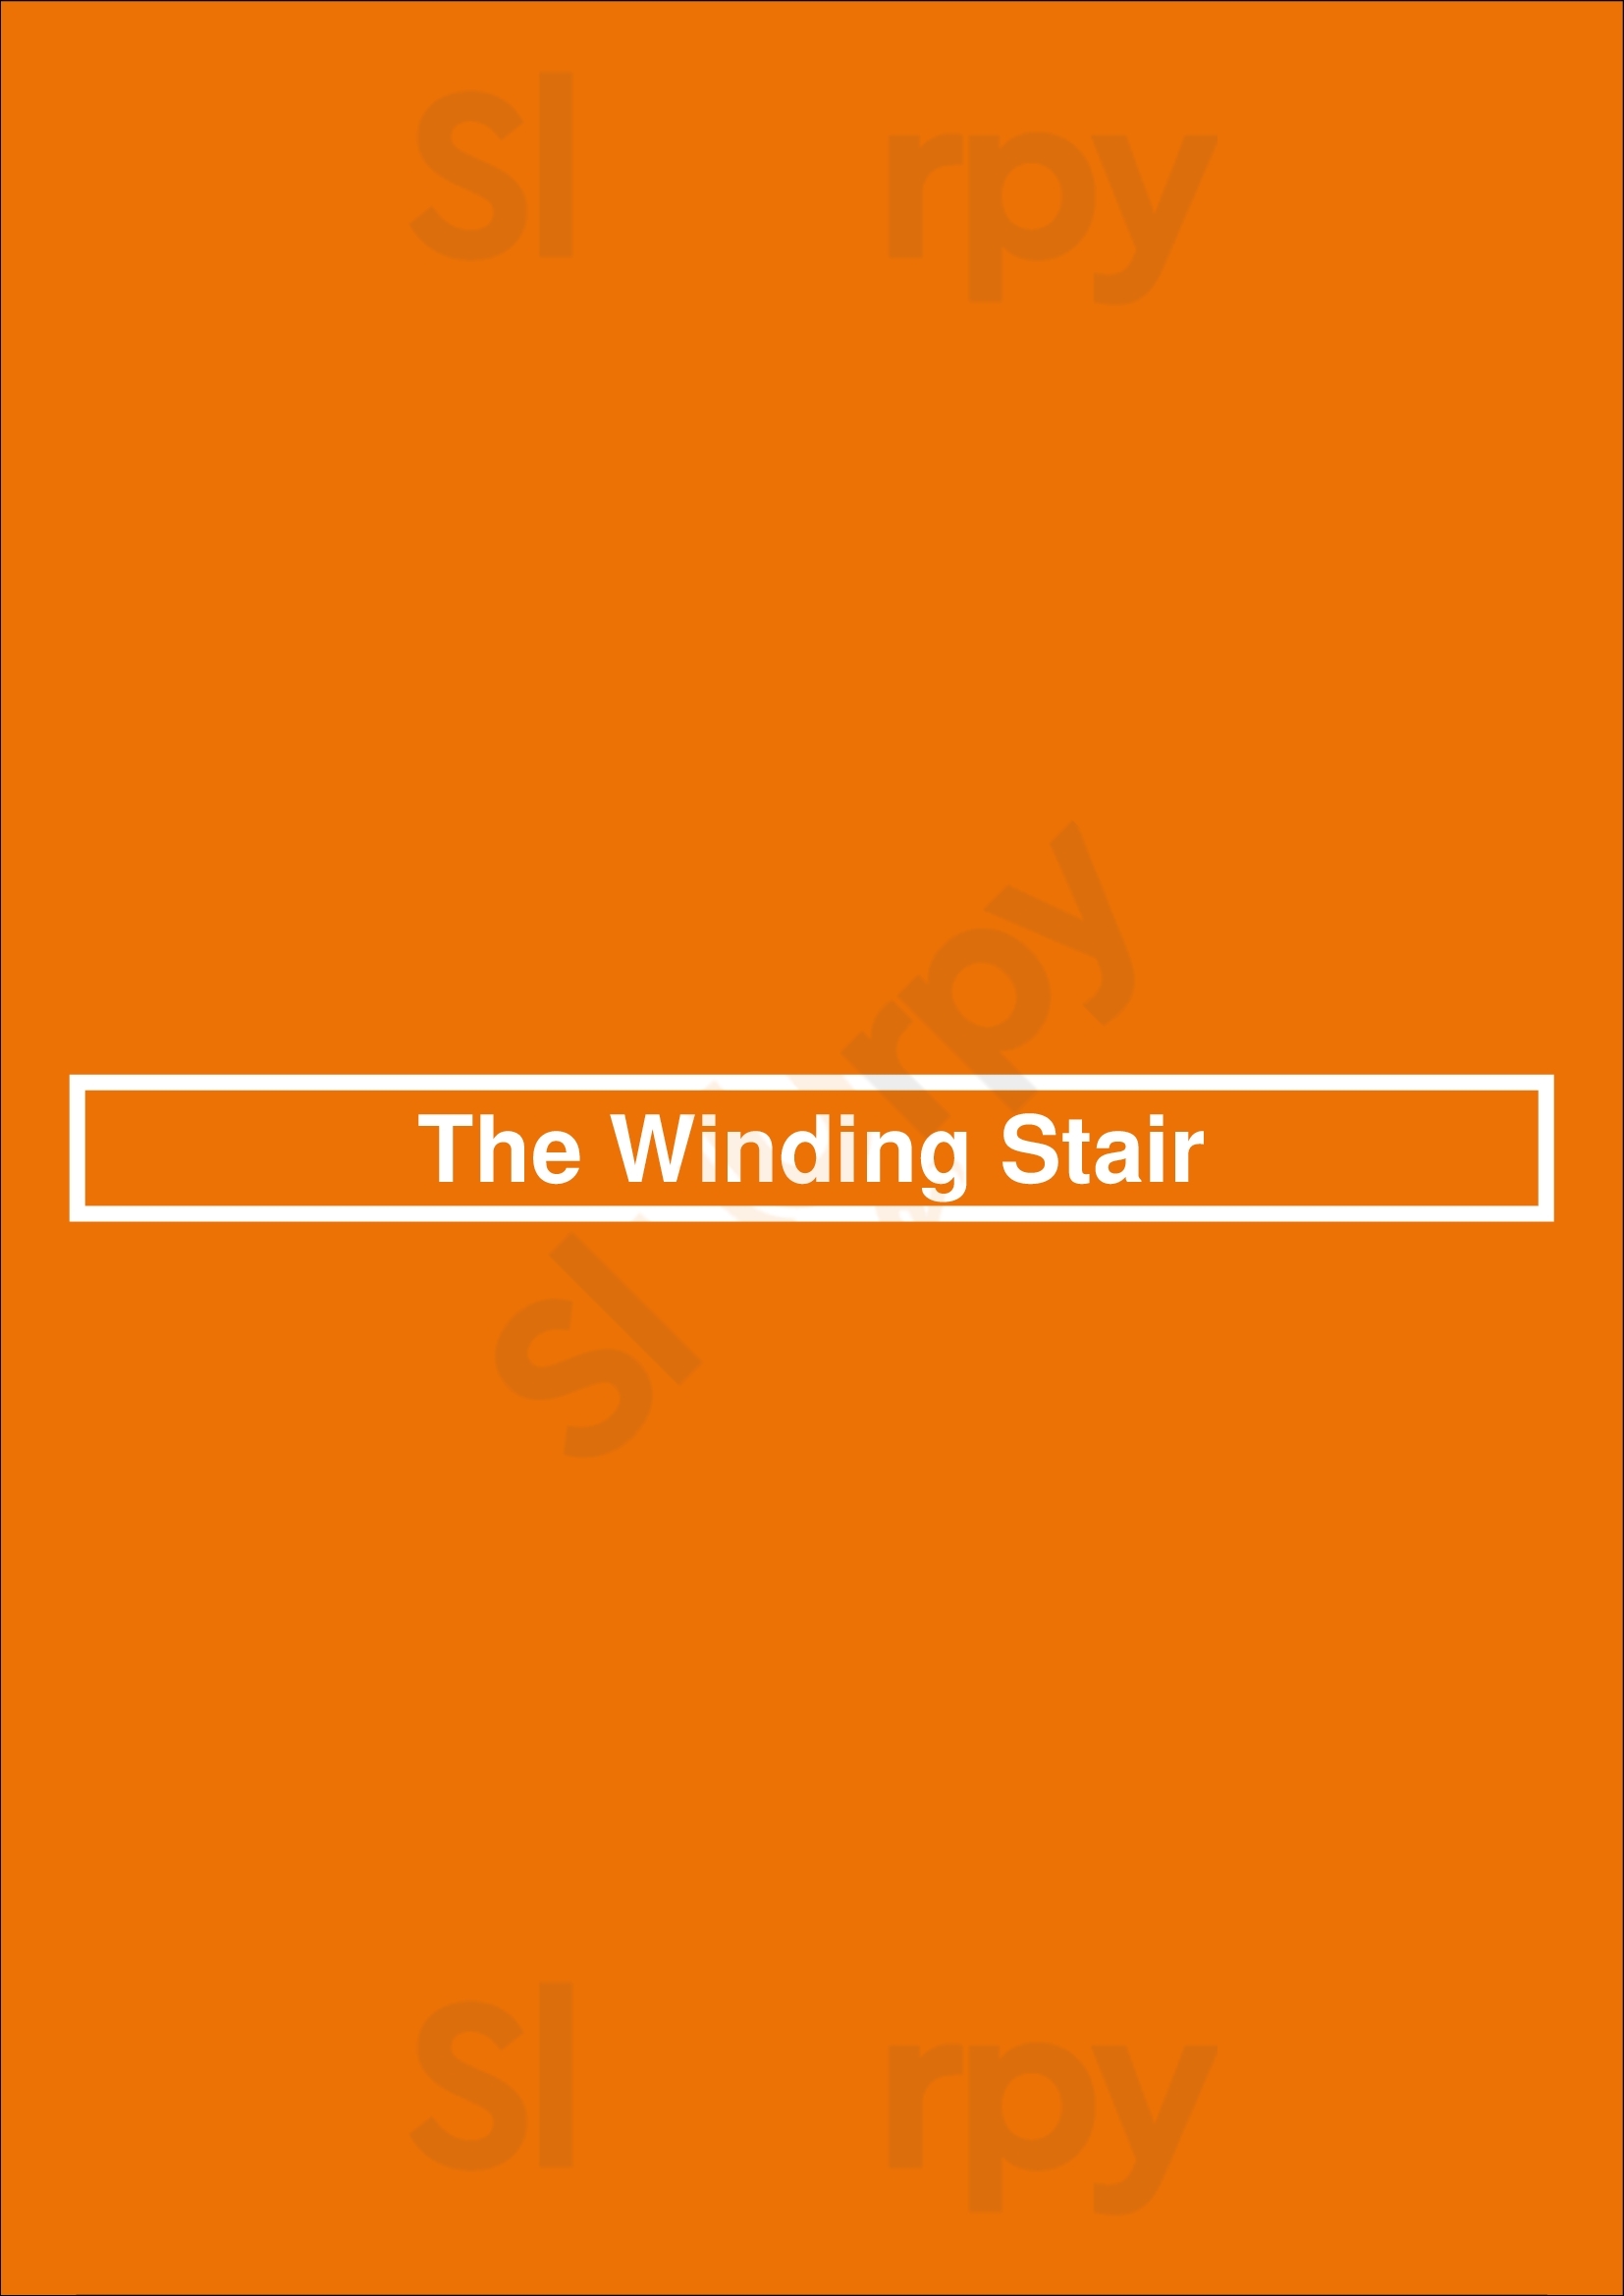 The Winding Stair Dublin Menu - 1